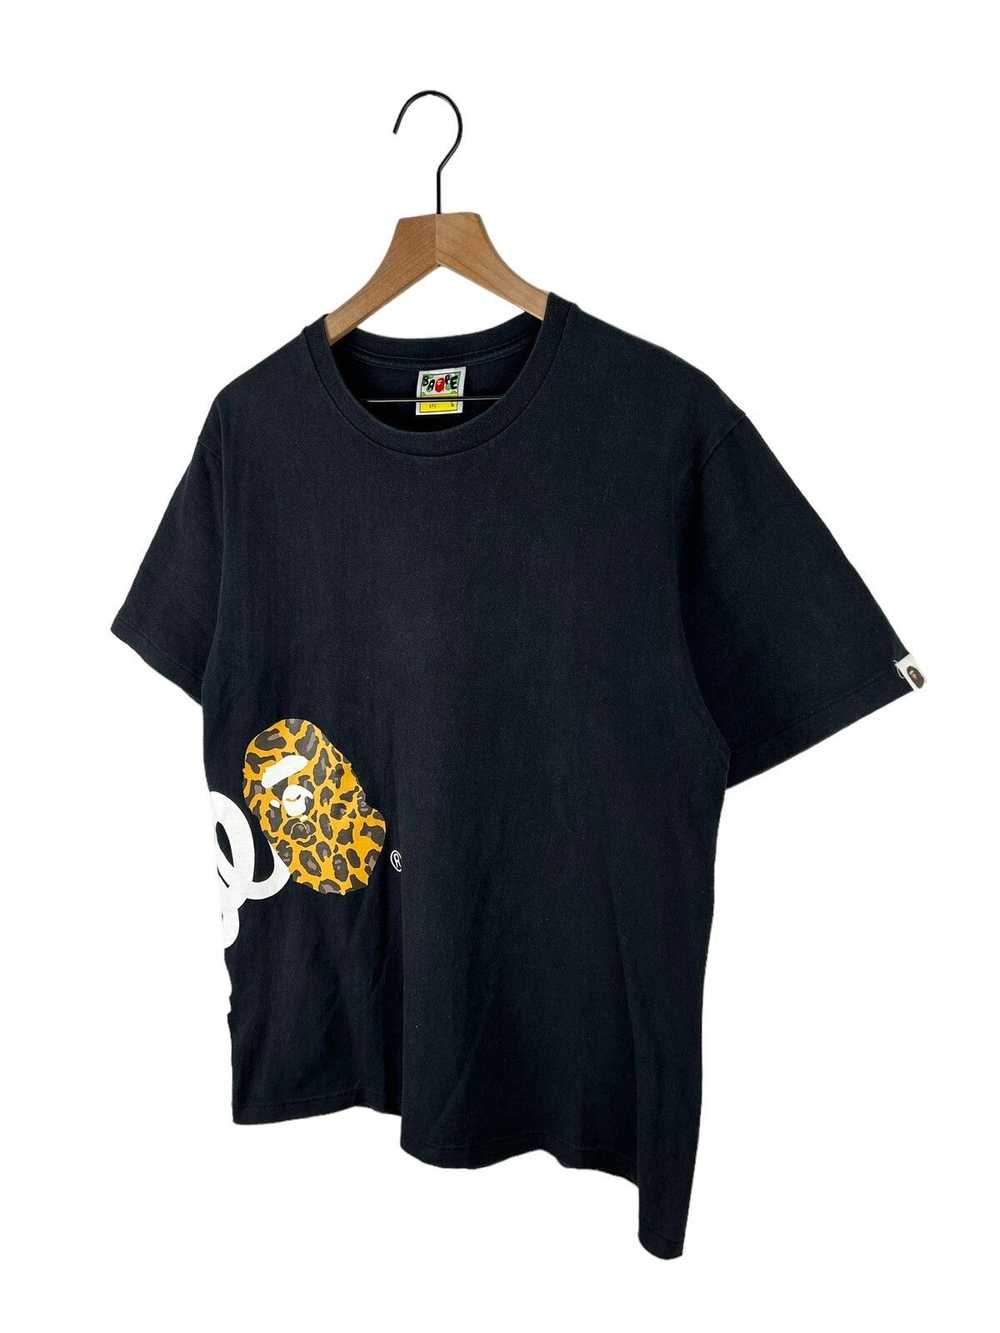 Bape Bape Leopard Side Logo Print T-Shirt - image 2